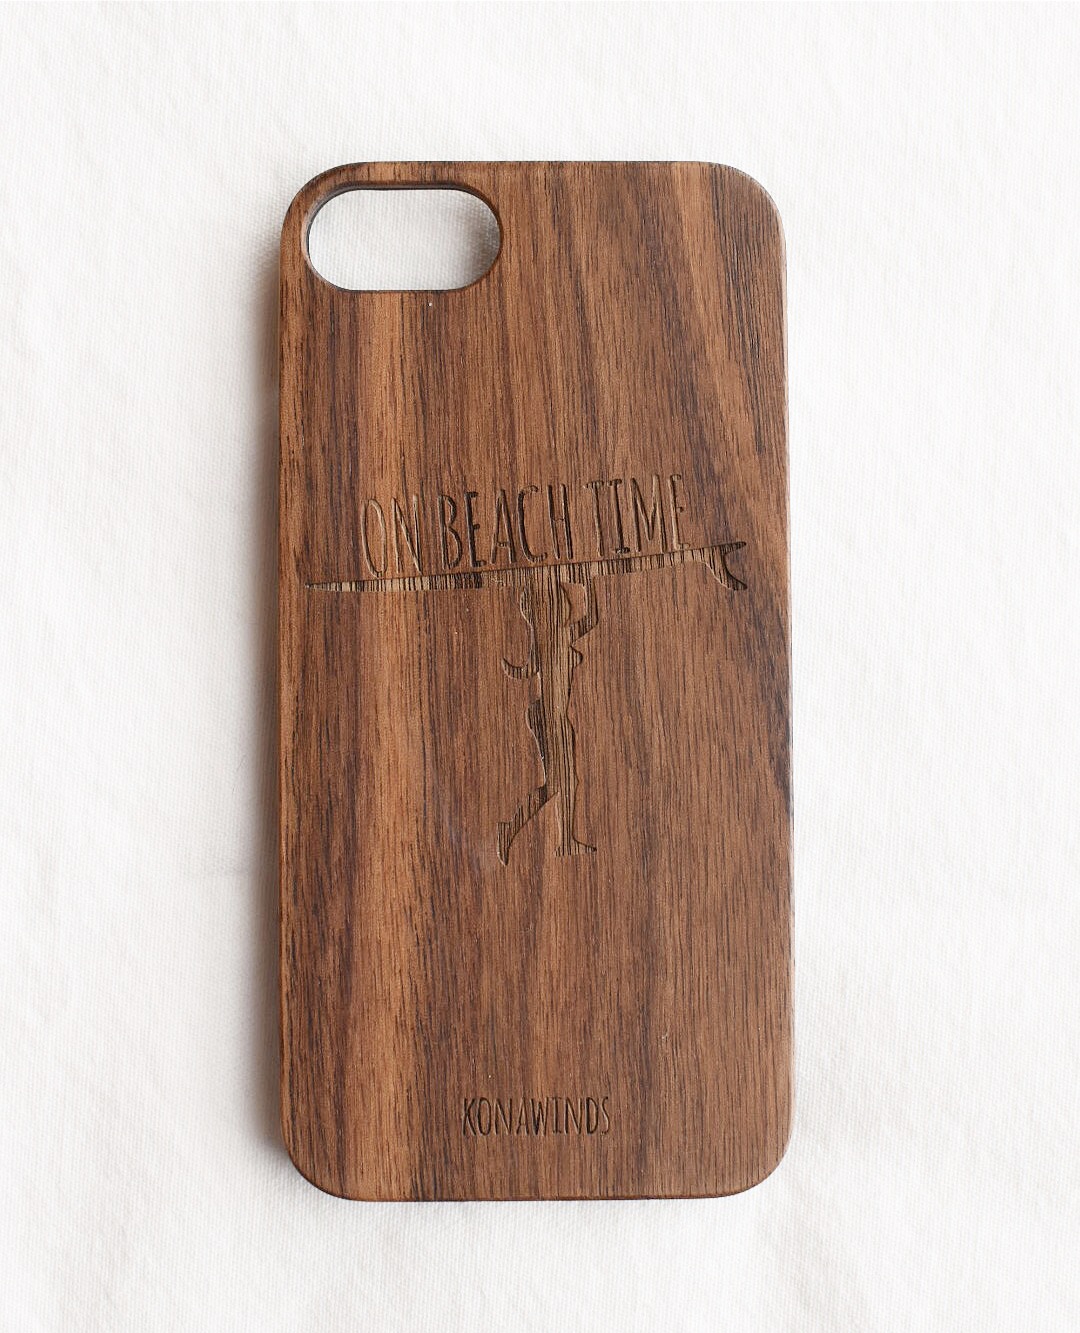 New wood case